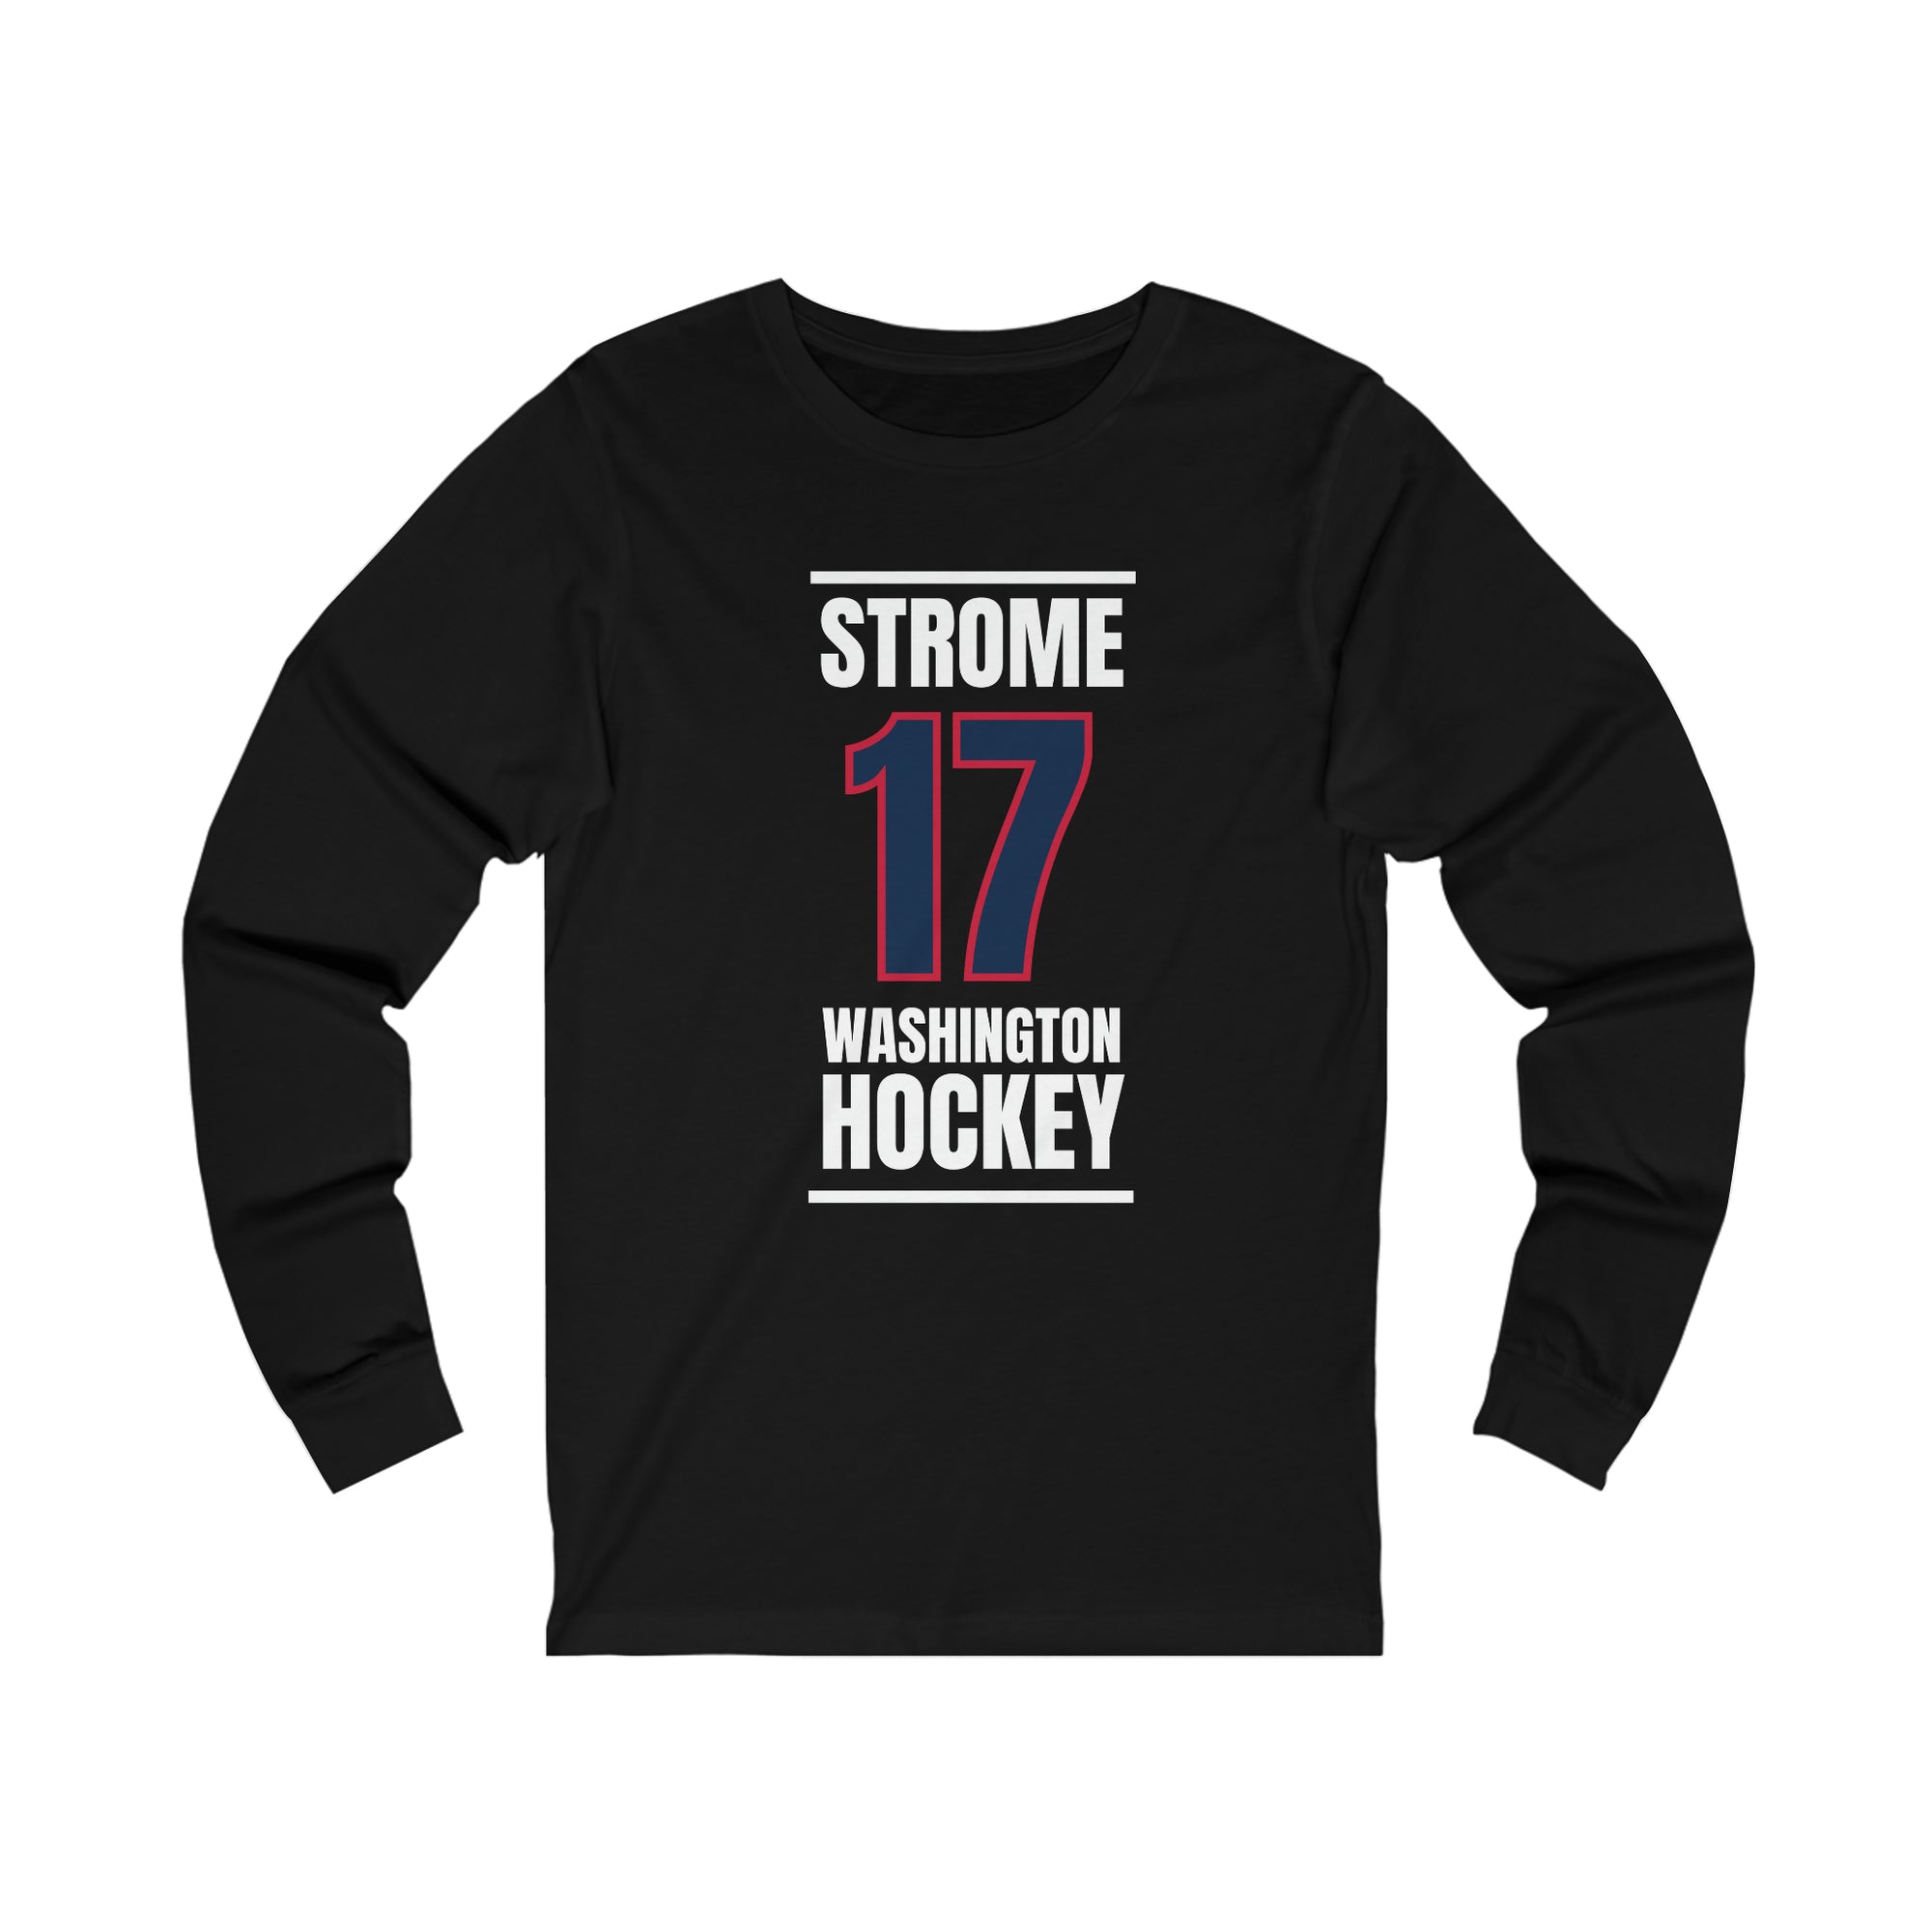 Strome 17 Washington Hockey Navy Vertical Design Unisex Jersey Long Sleeve Shirt